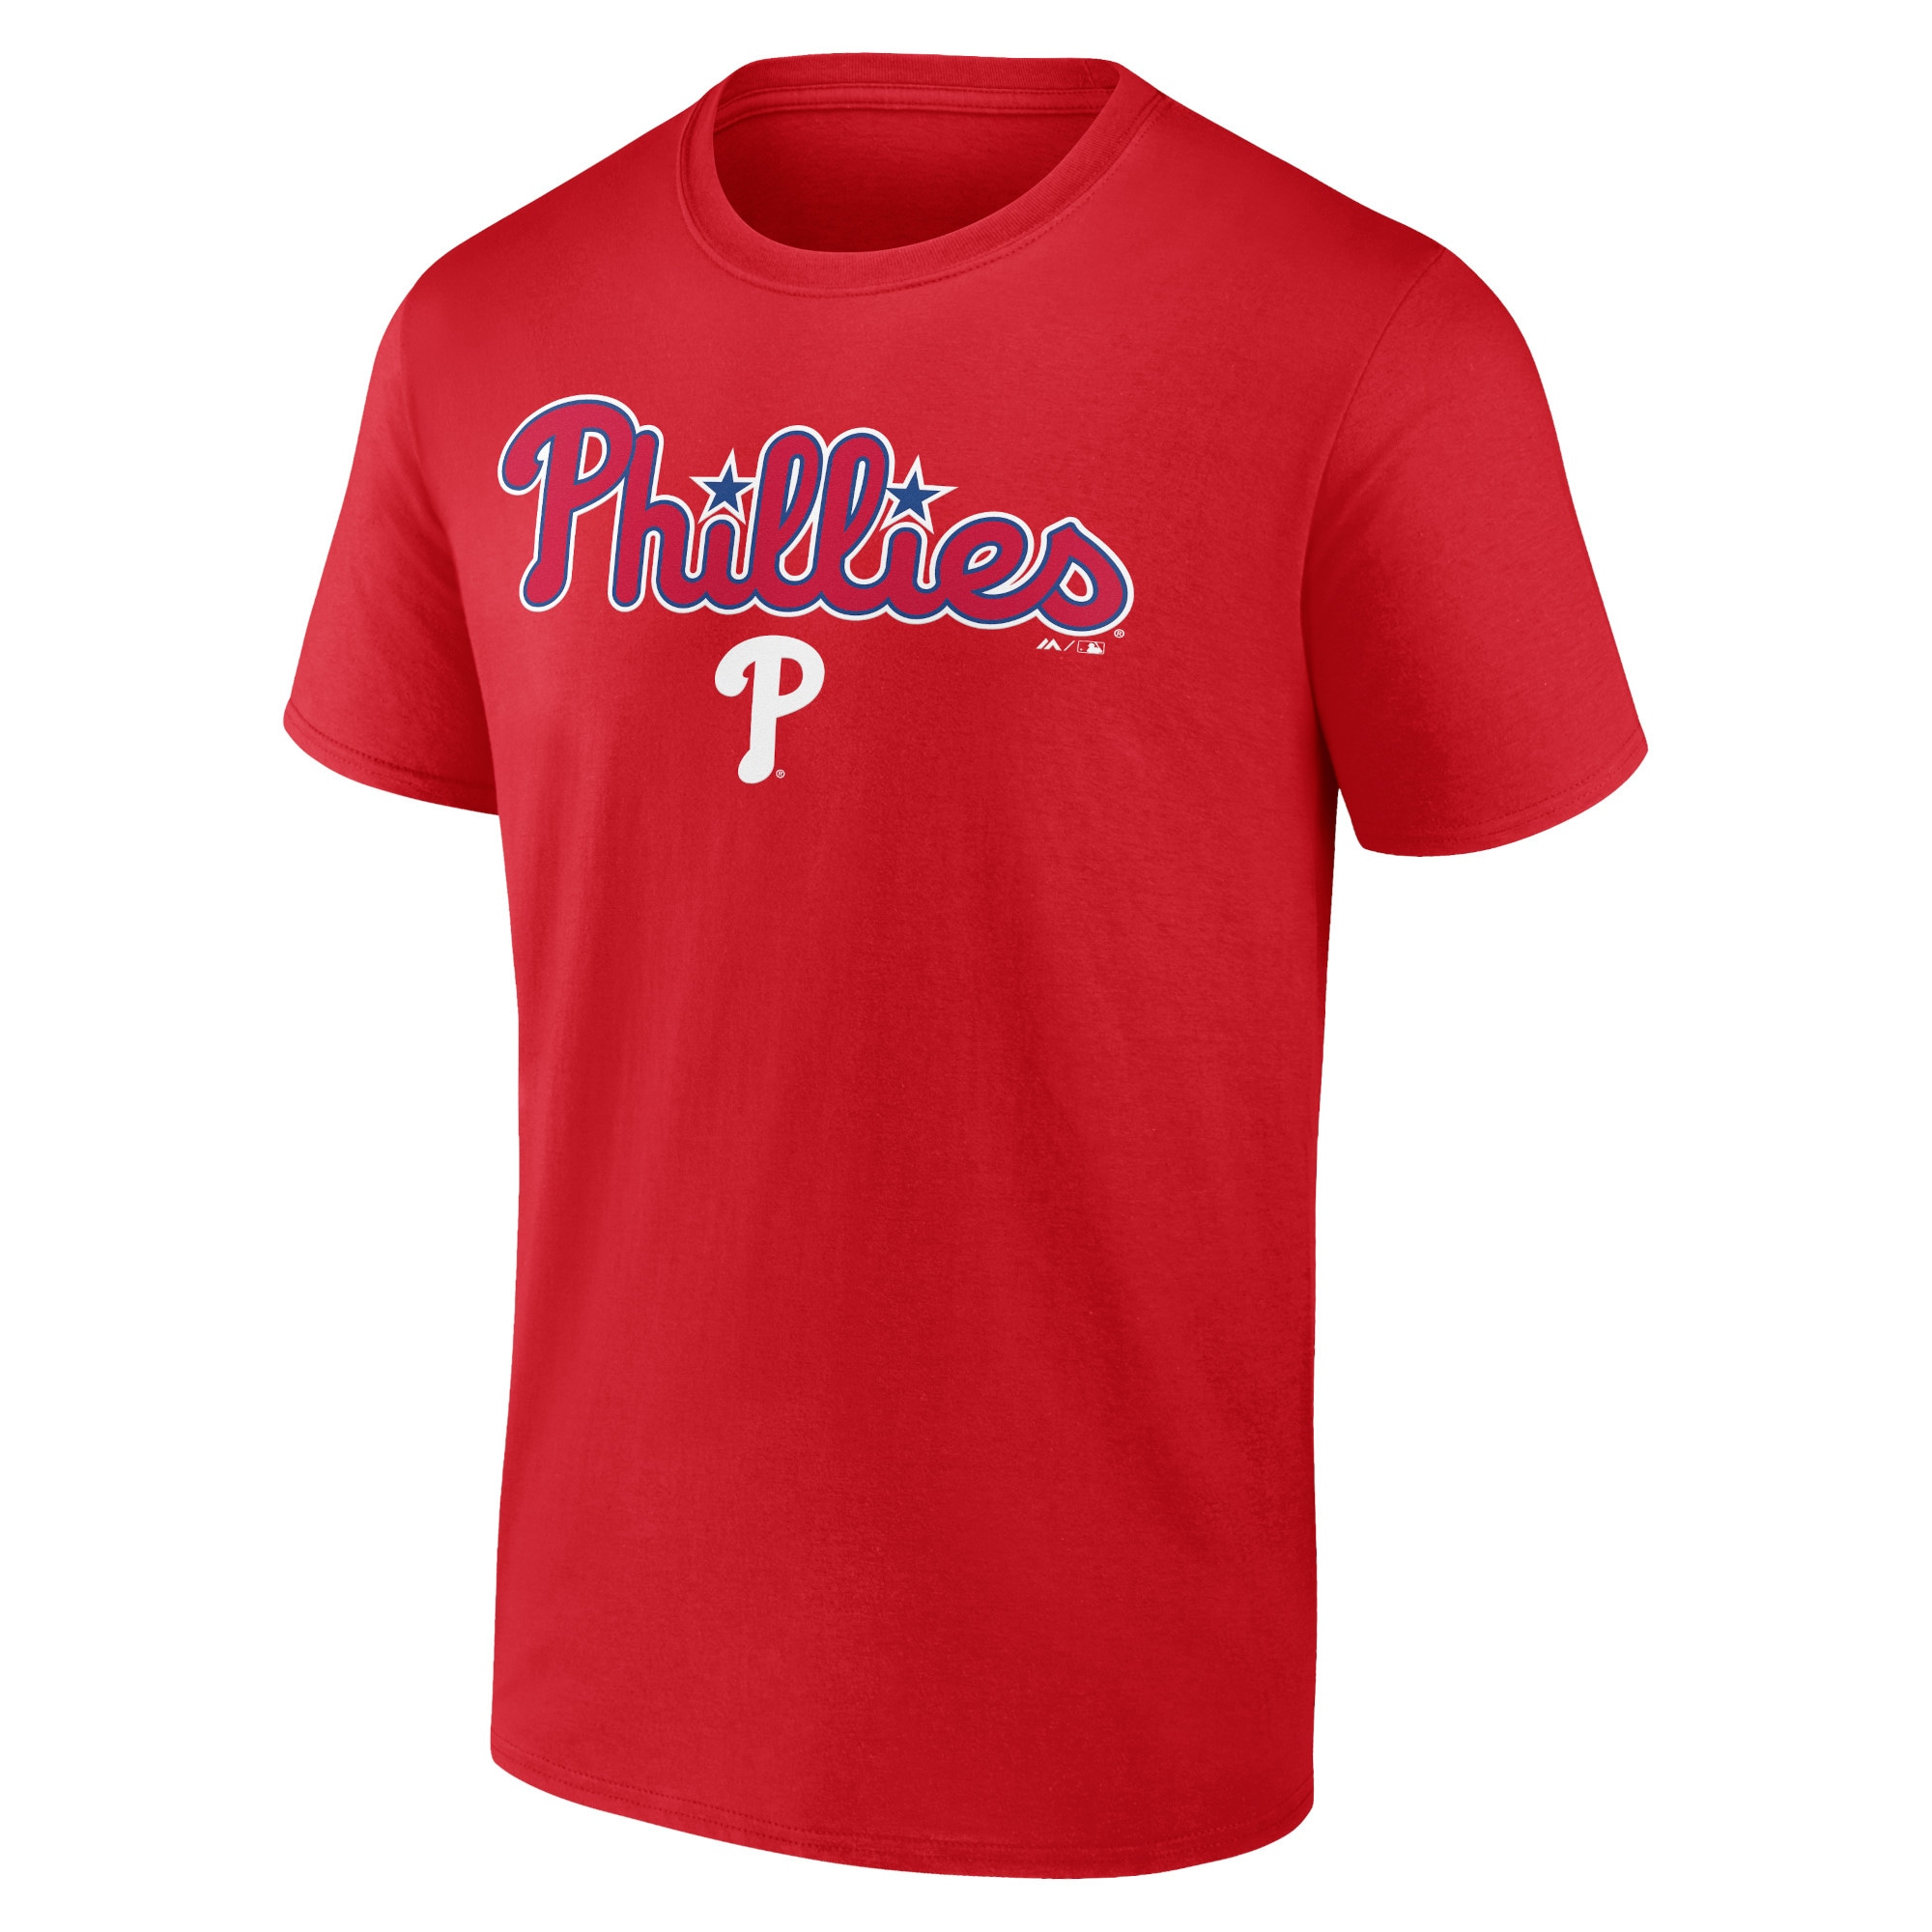 Men's Red Philadelphia Phillies Team Primary Logo T-Shirt - image 2 of 3